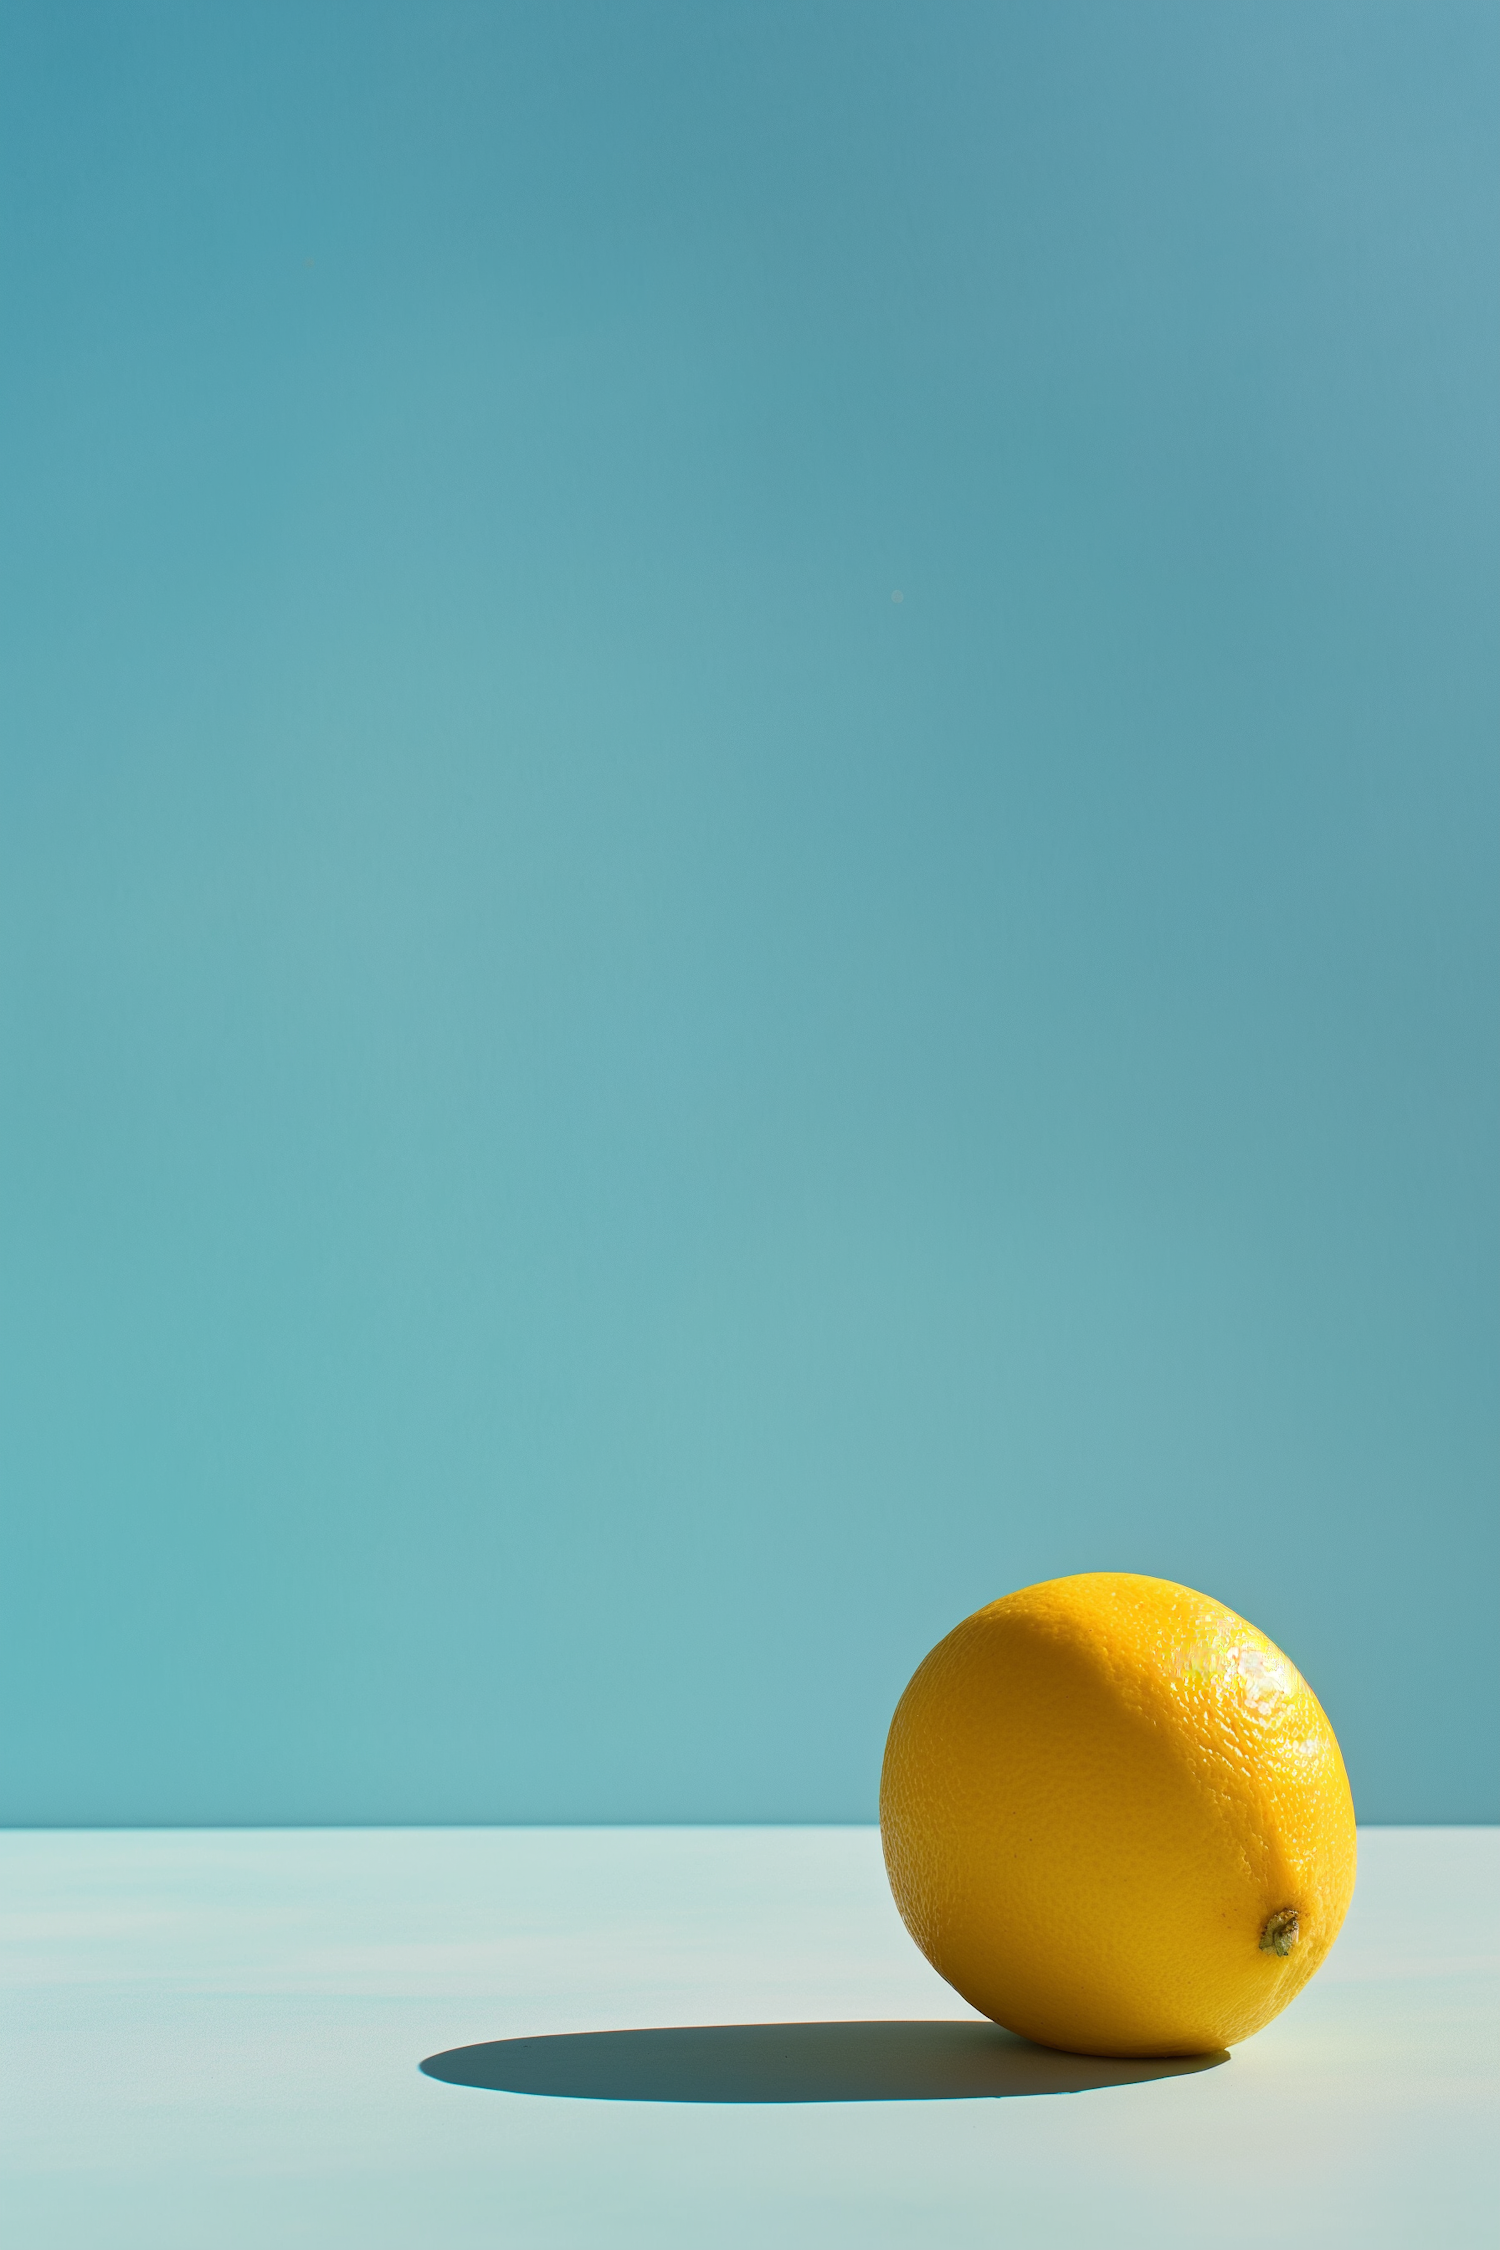 Vibrant Yellow Lemon on Pale Blue Background